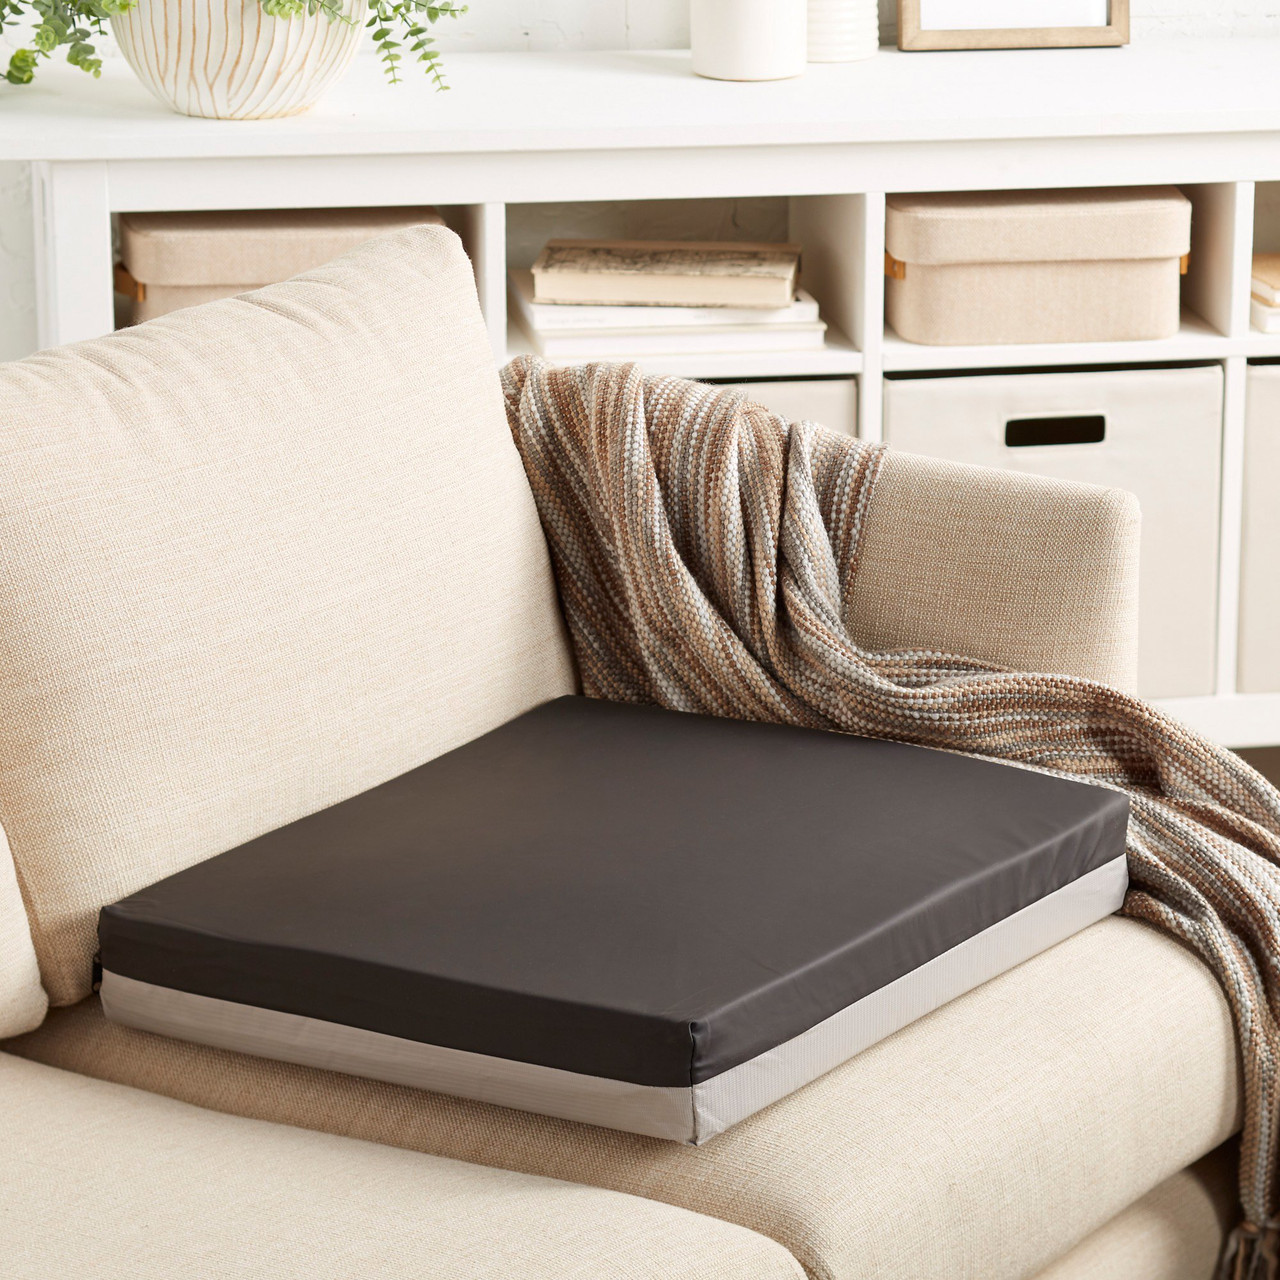 McKesson Premium Seat Cushion - Molded Foam, Waterproof Nylon Cover, Black